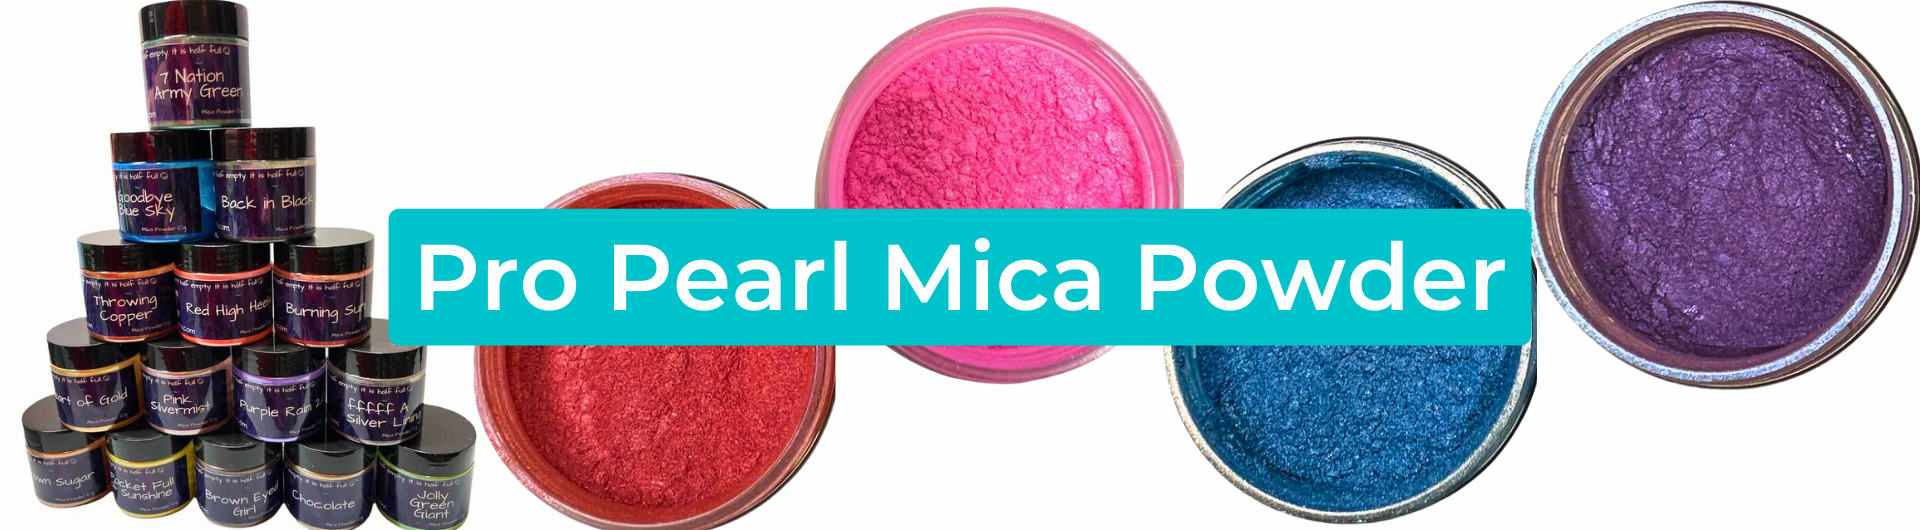 Pro Pearl Mica Powder